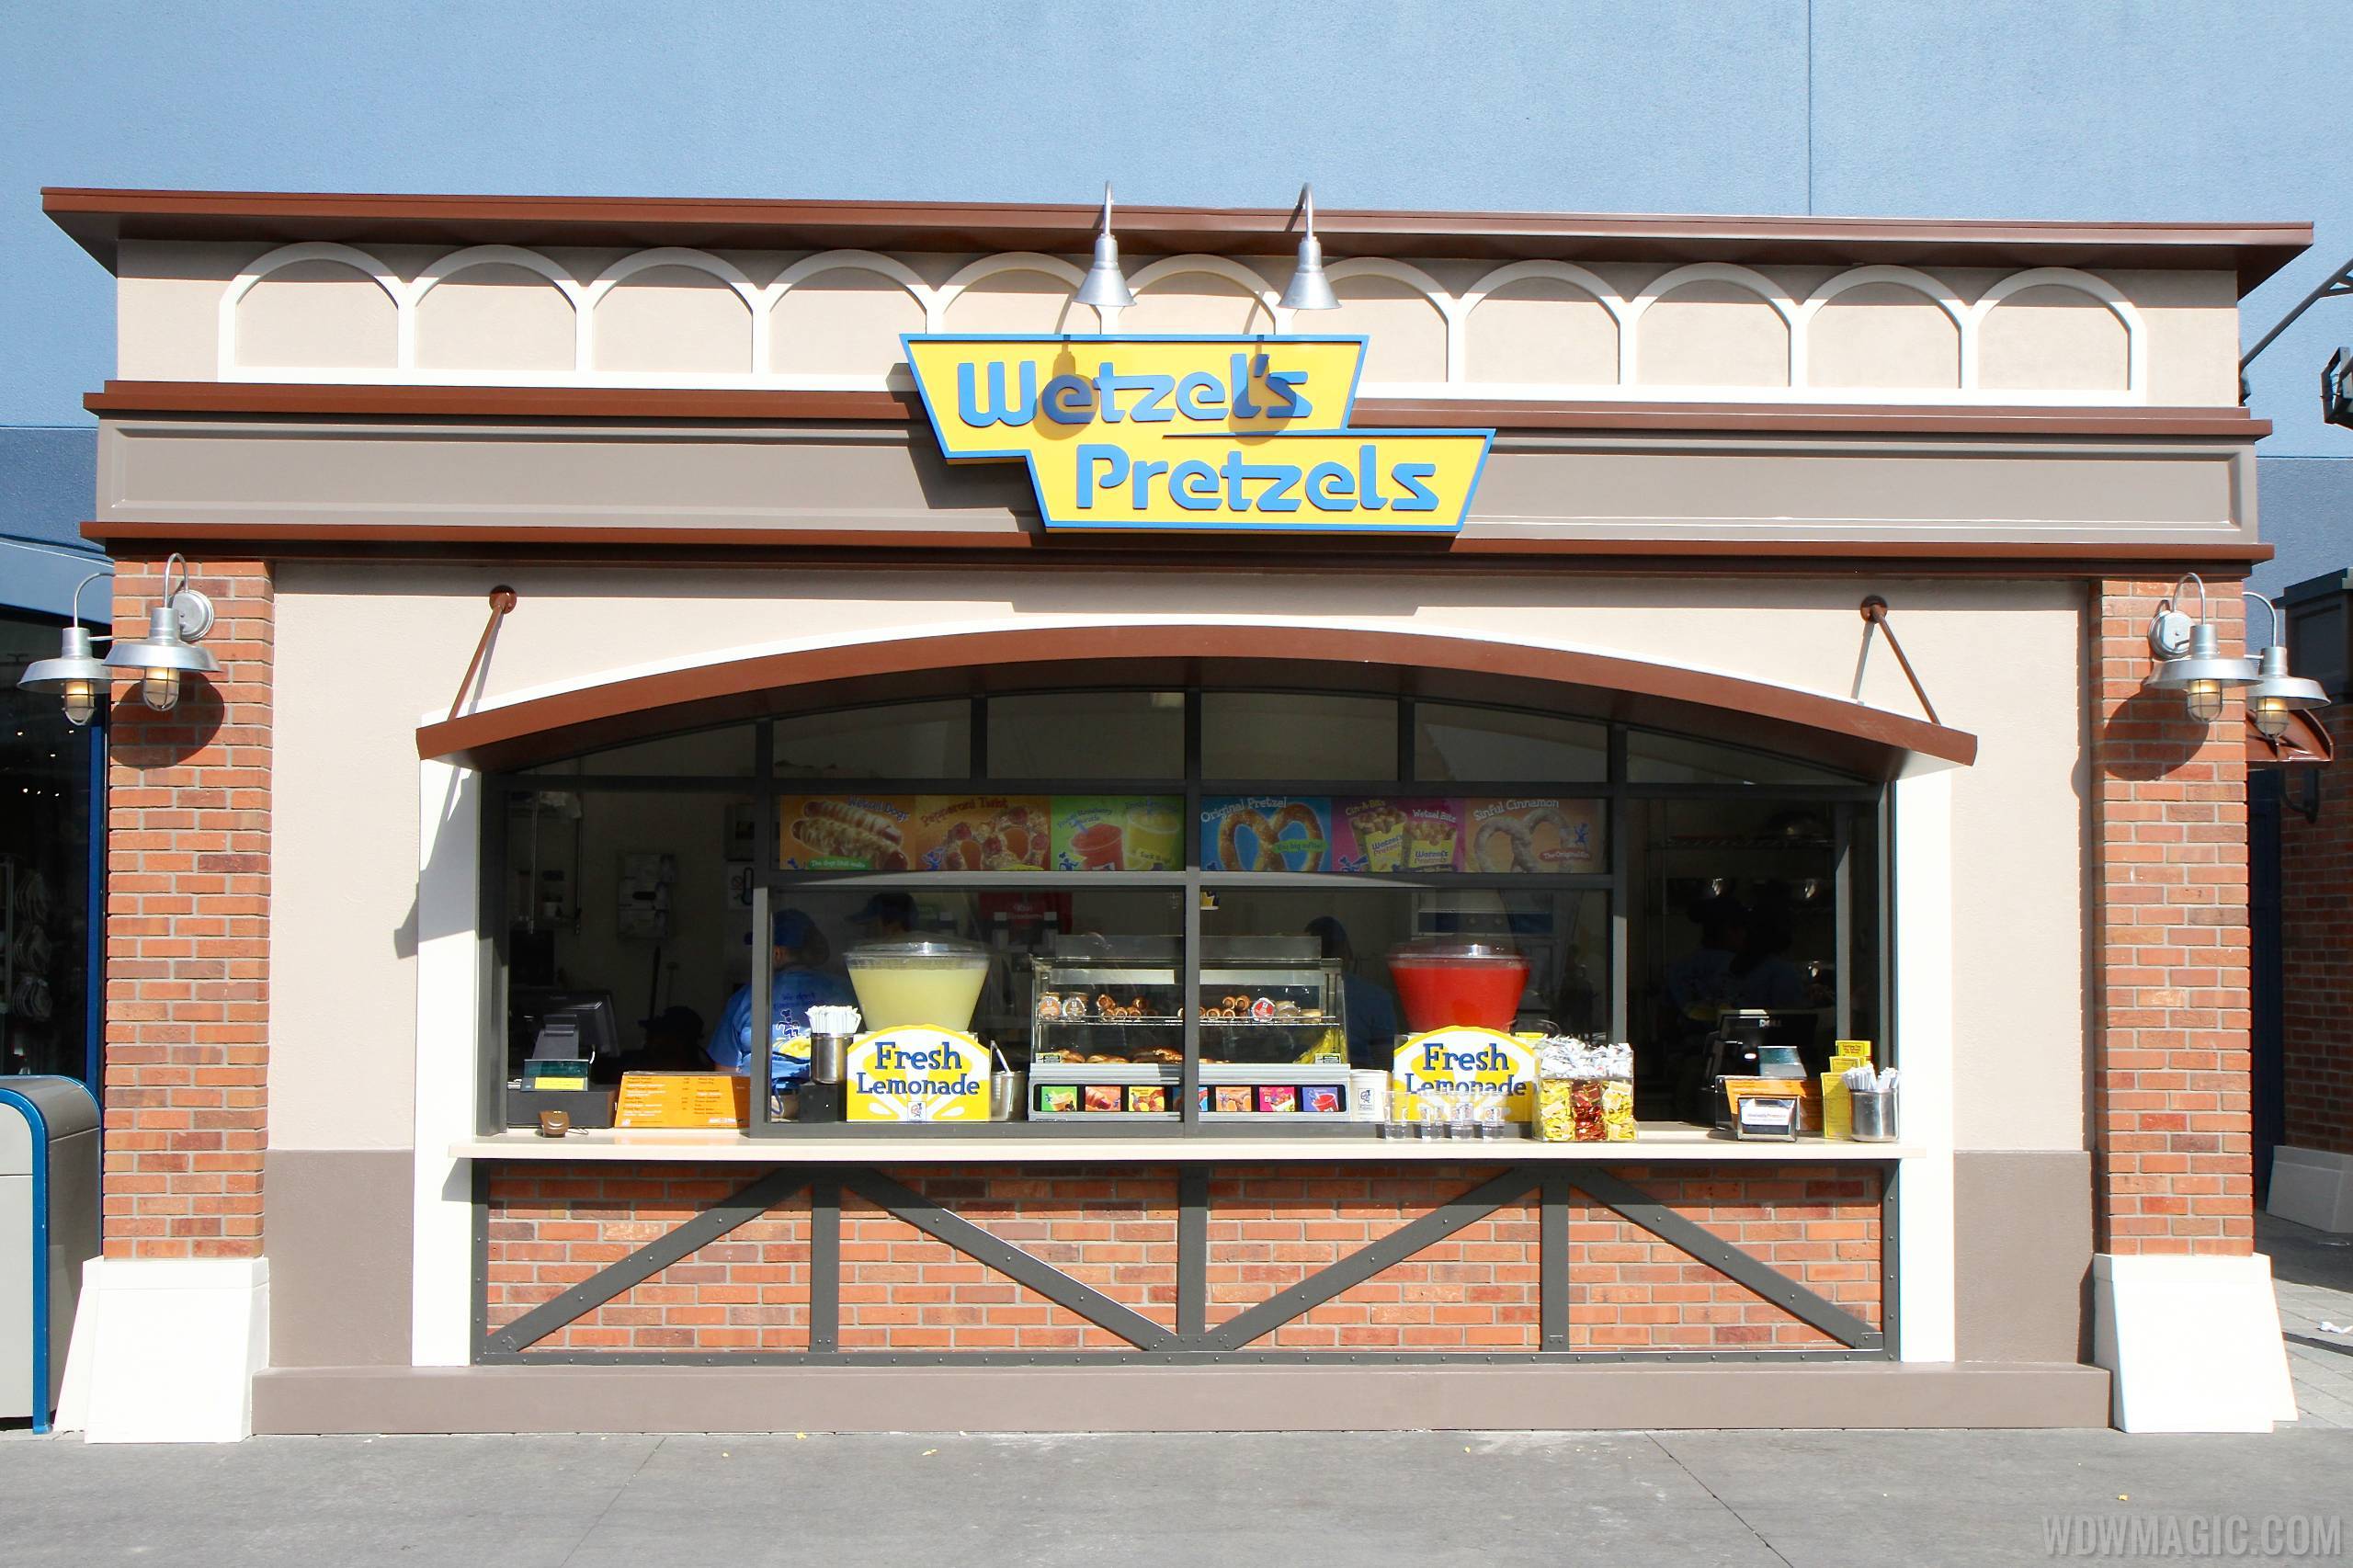 Wetzel's Pretzels and Haagen-Dazs kiosks open